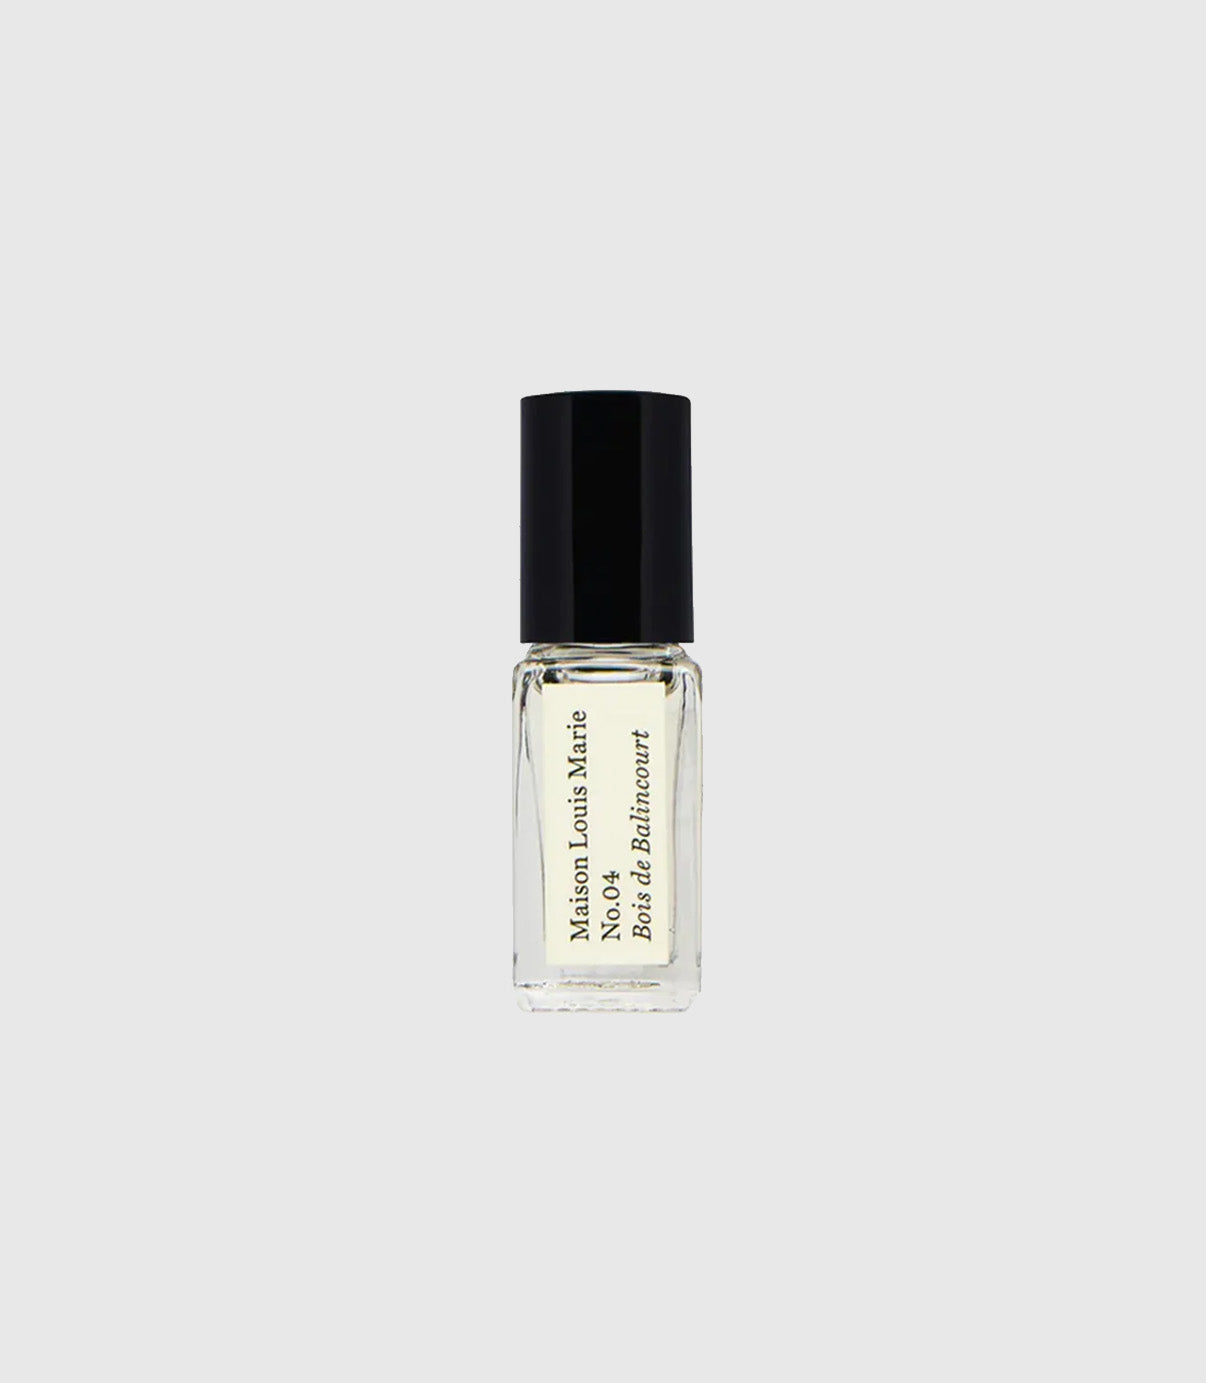 Perfume oil 3 ml. - Maison Louis Marie